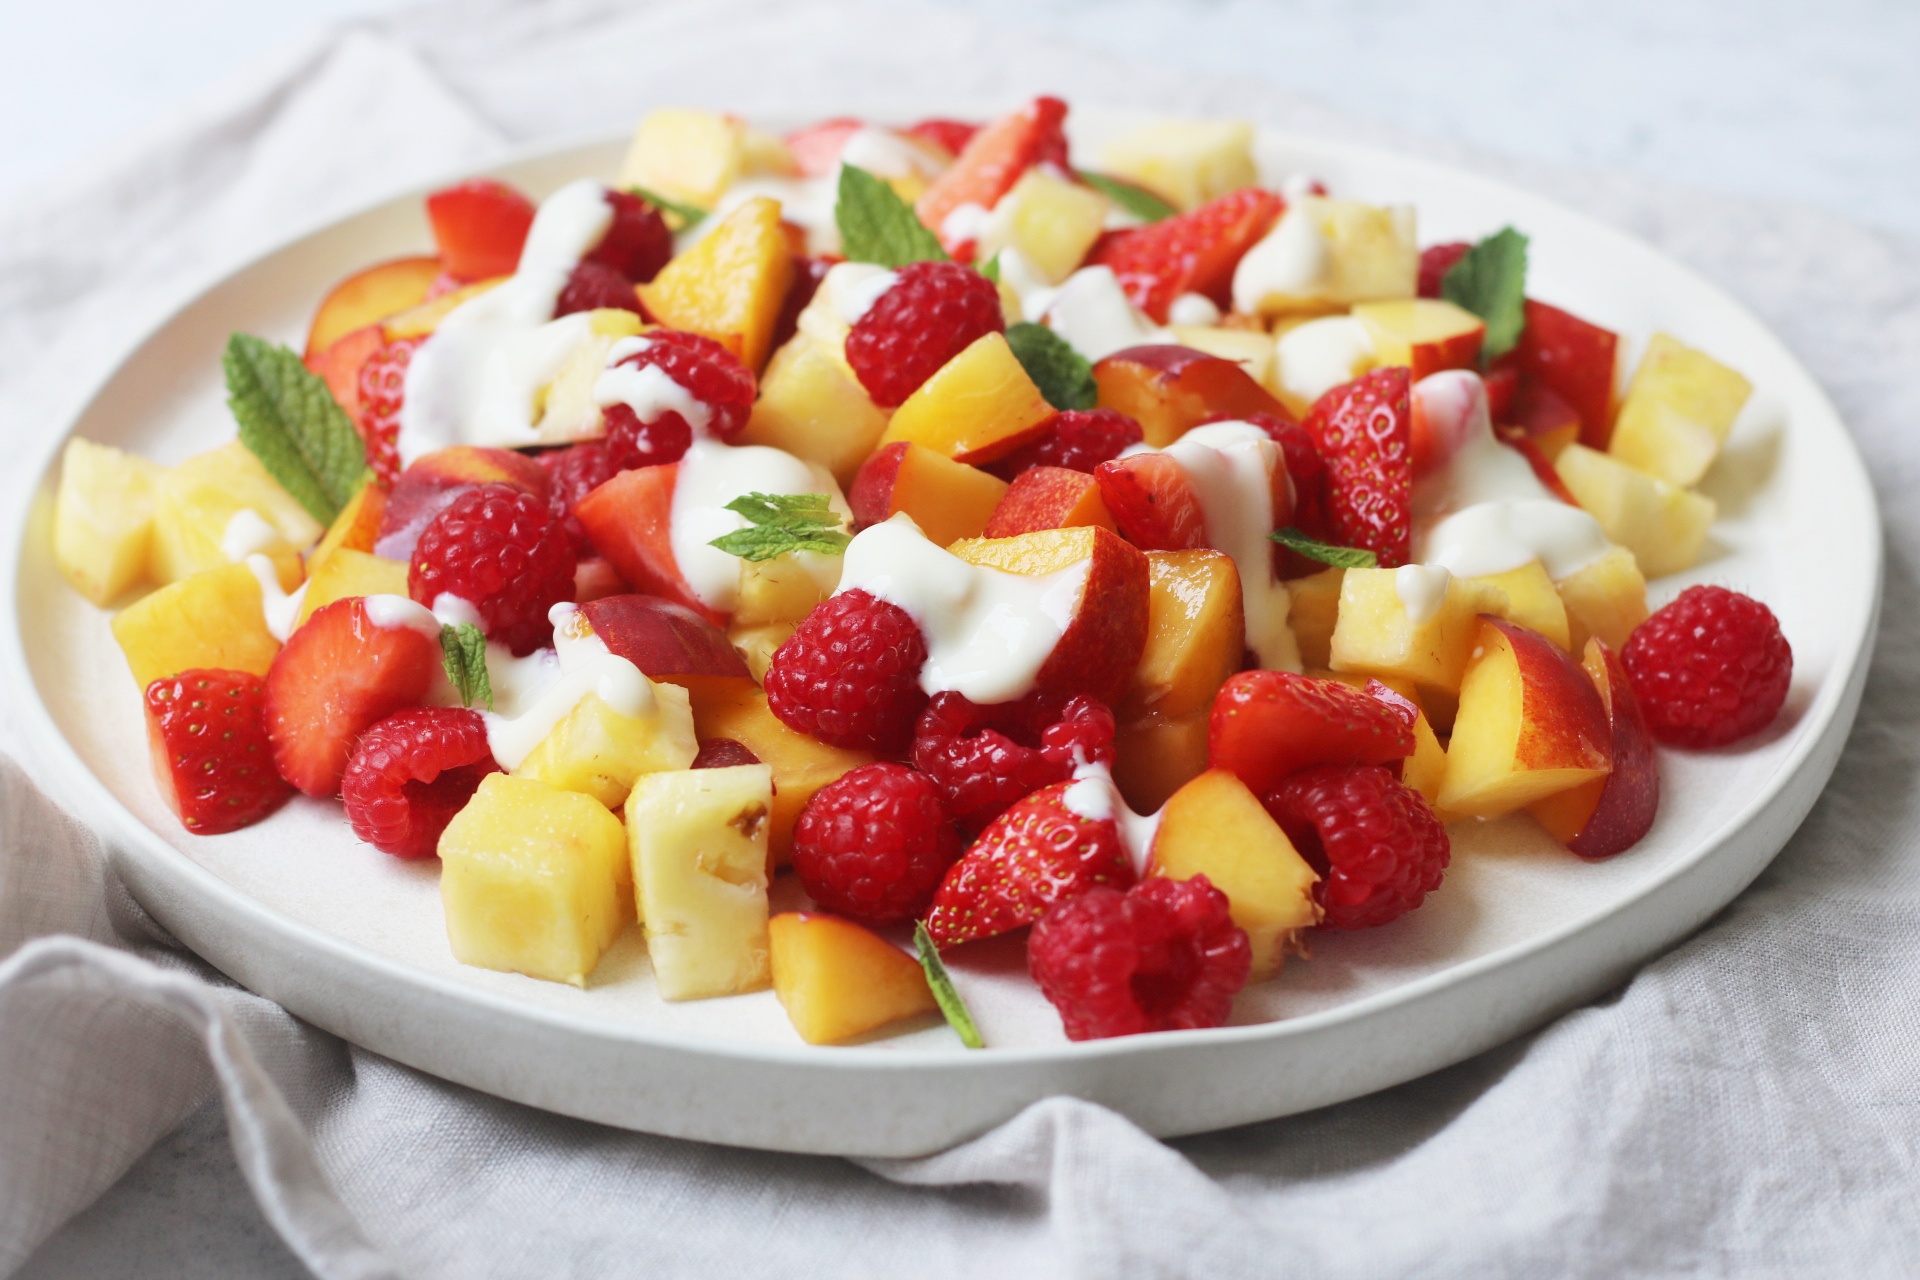 Summer Fruit Salad with Yogurt Dressing